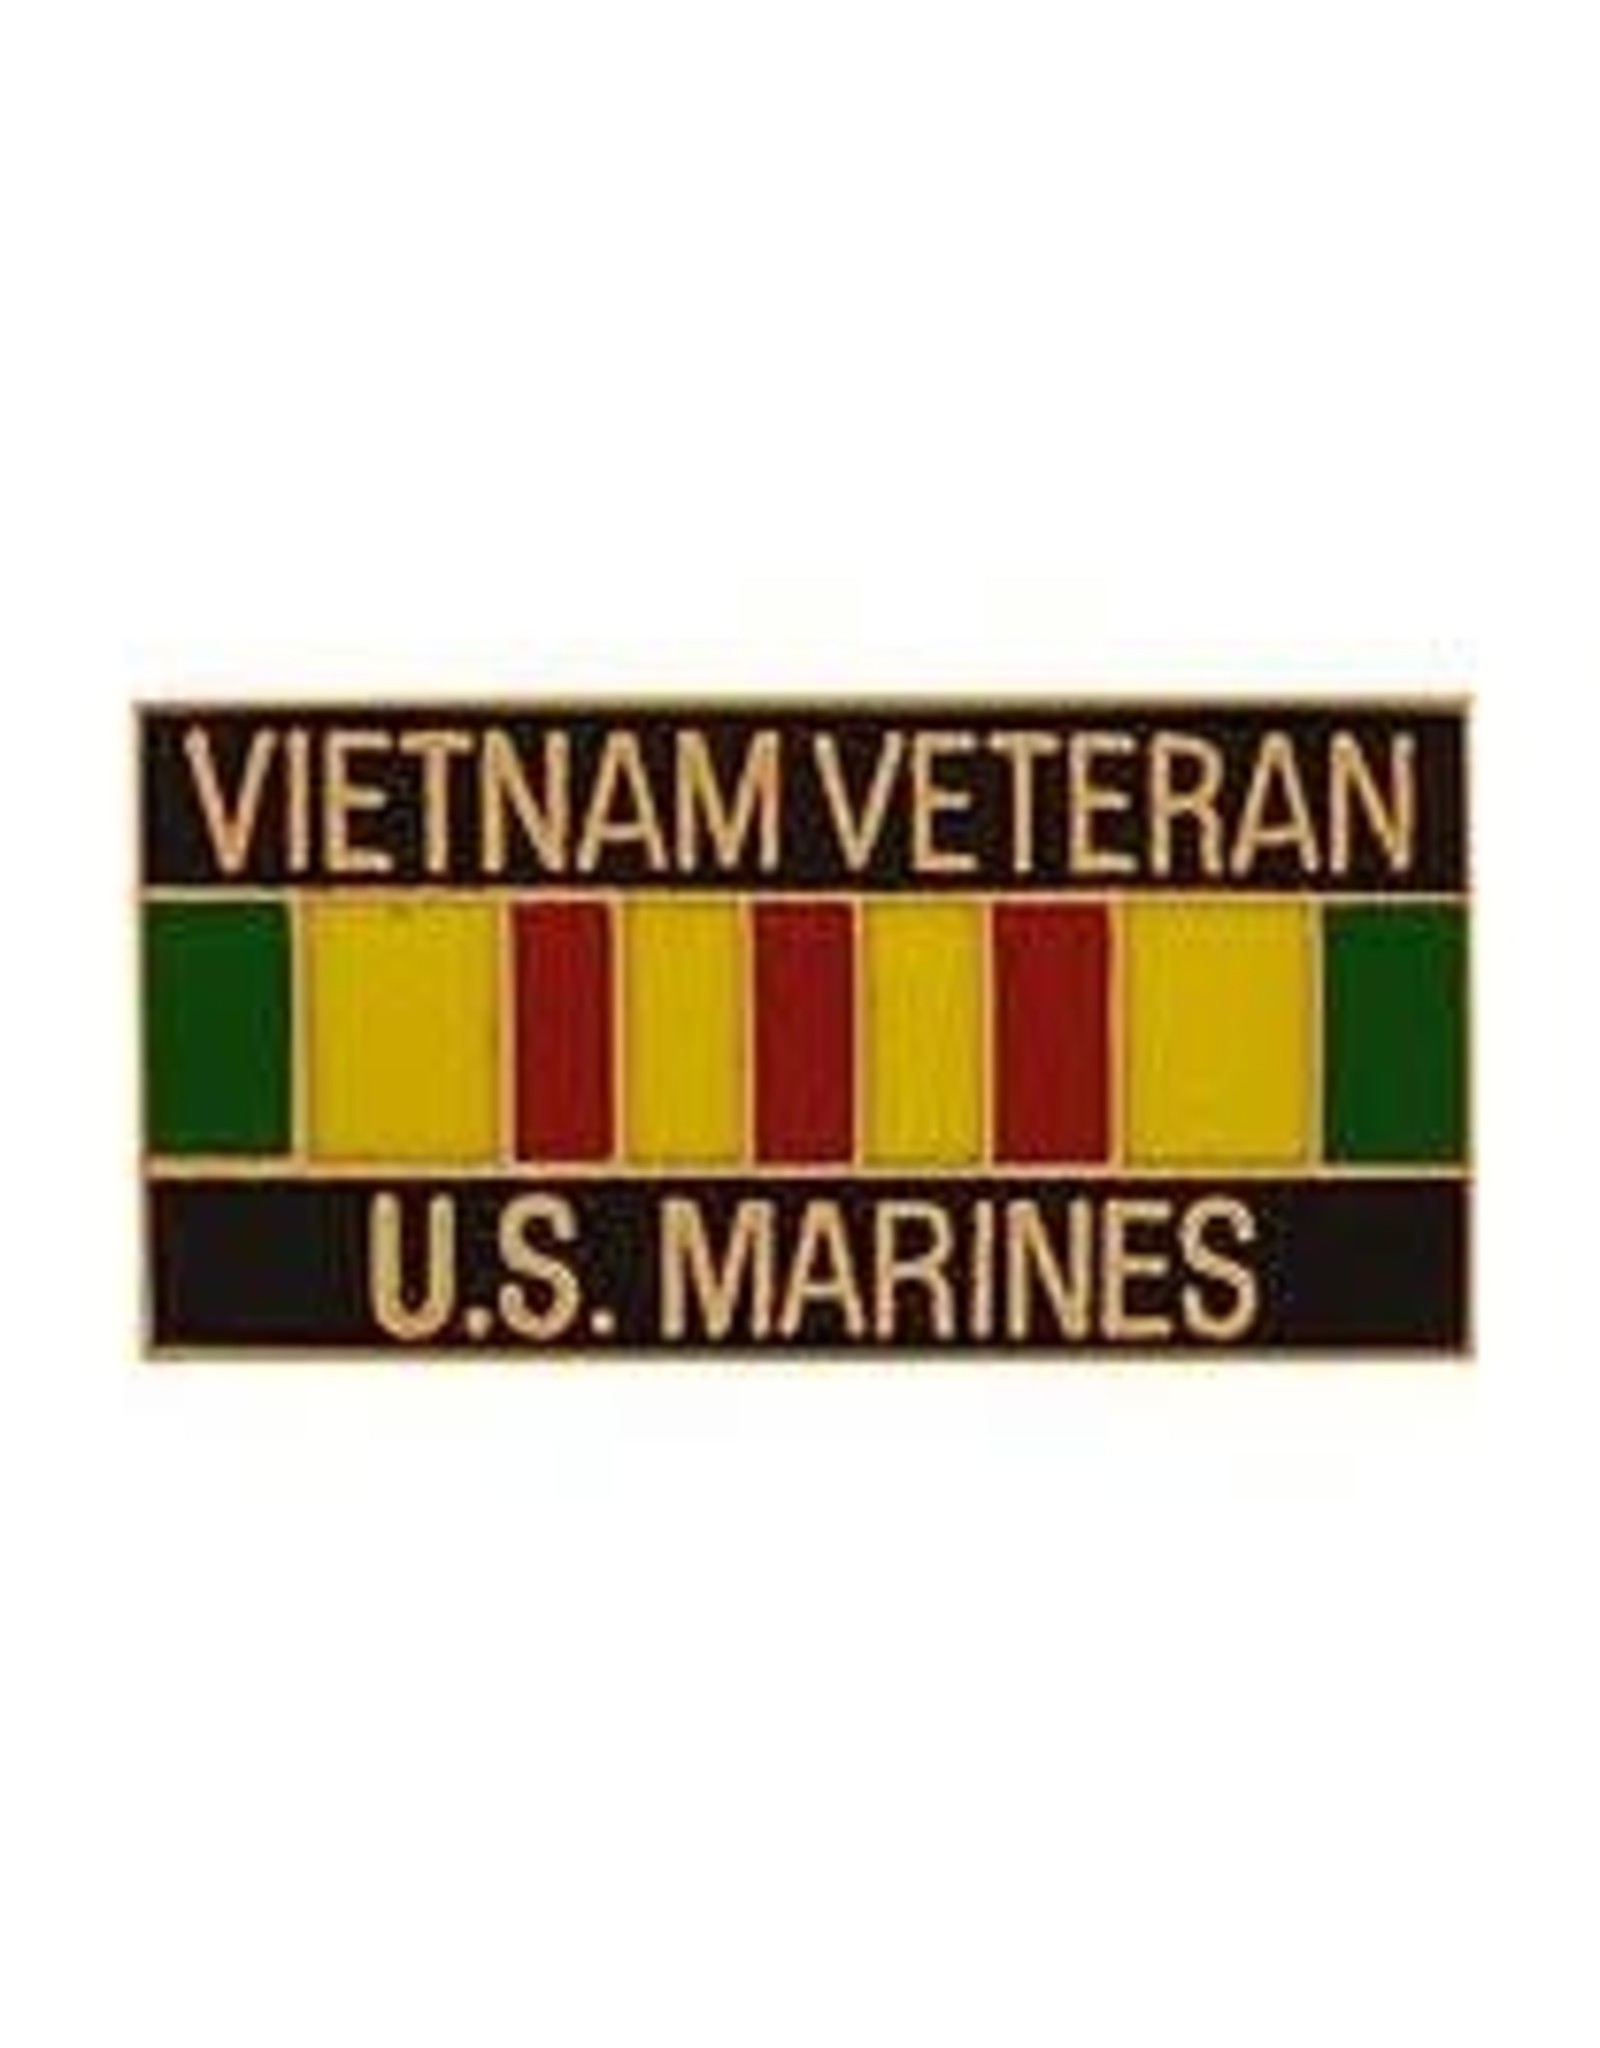 Pin - Vietnam USMC Veteran Ribbon